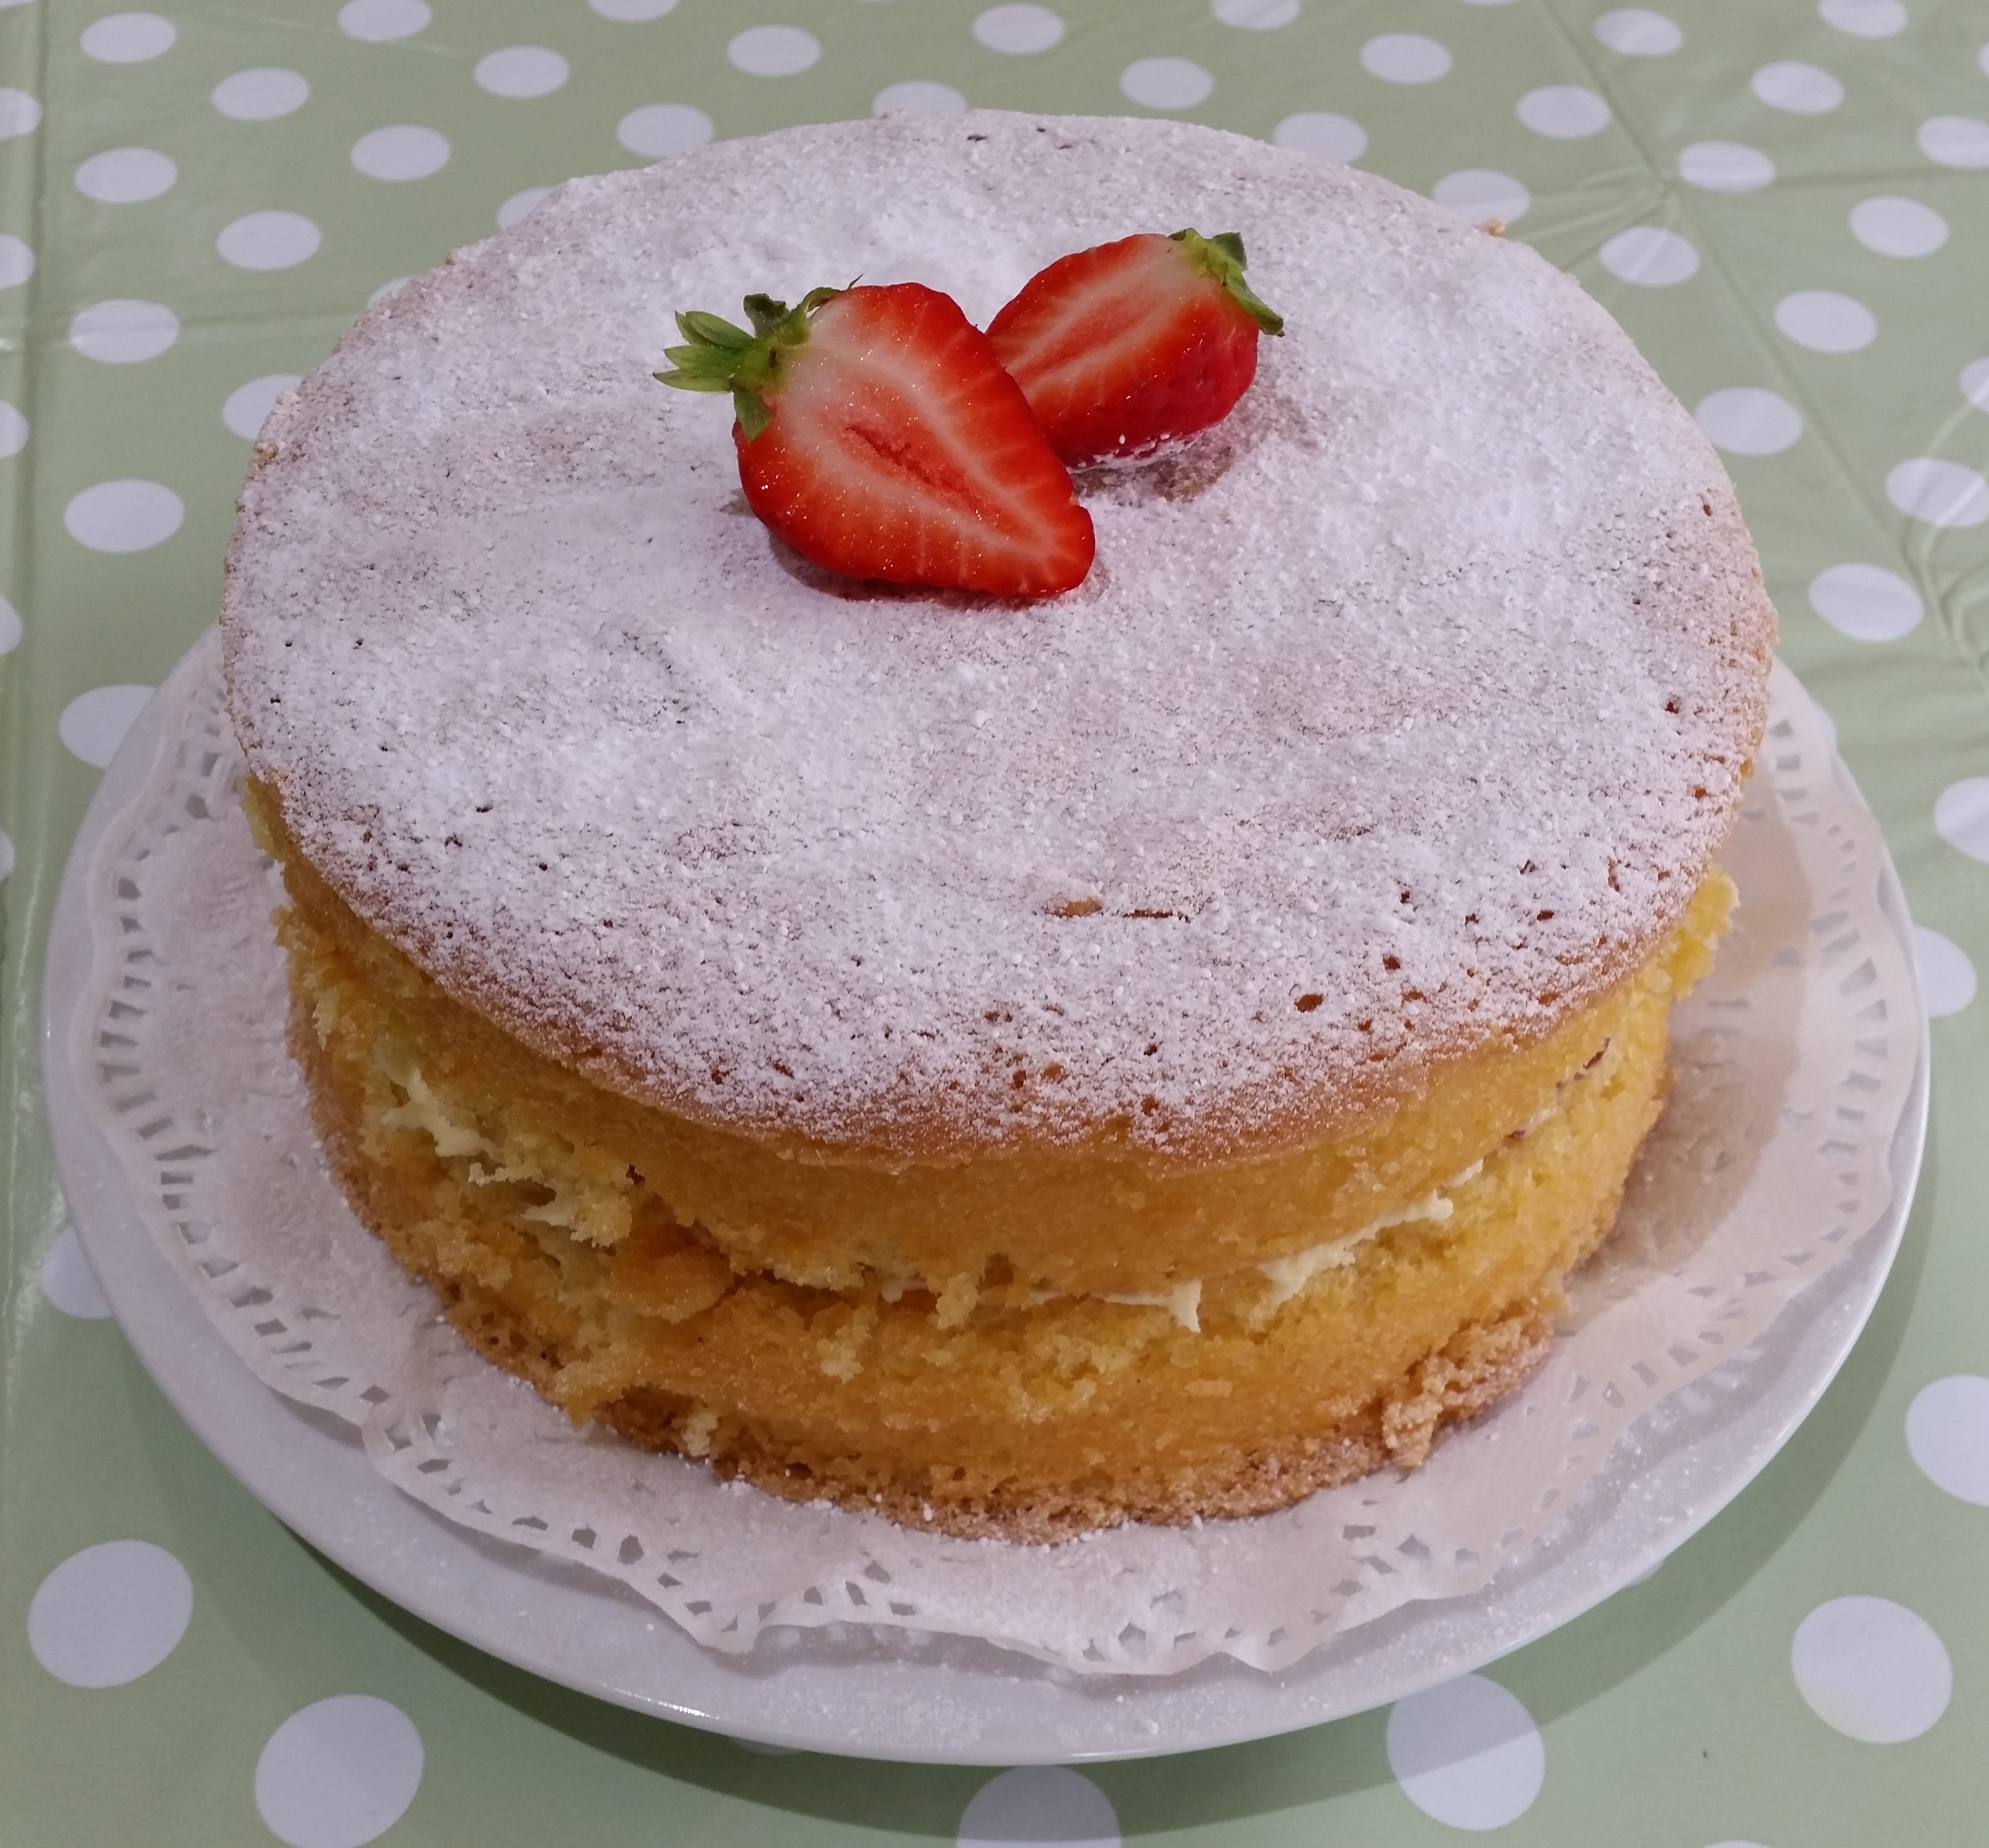 Sponge Celebration Cake with Strawberries